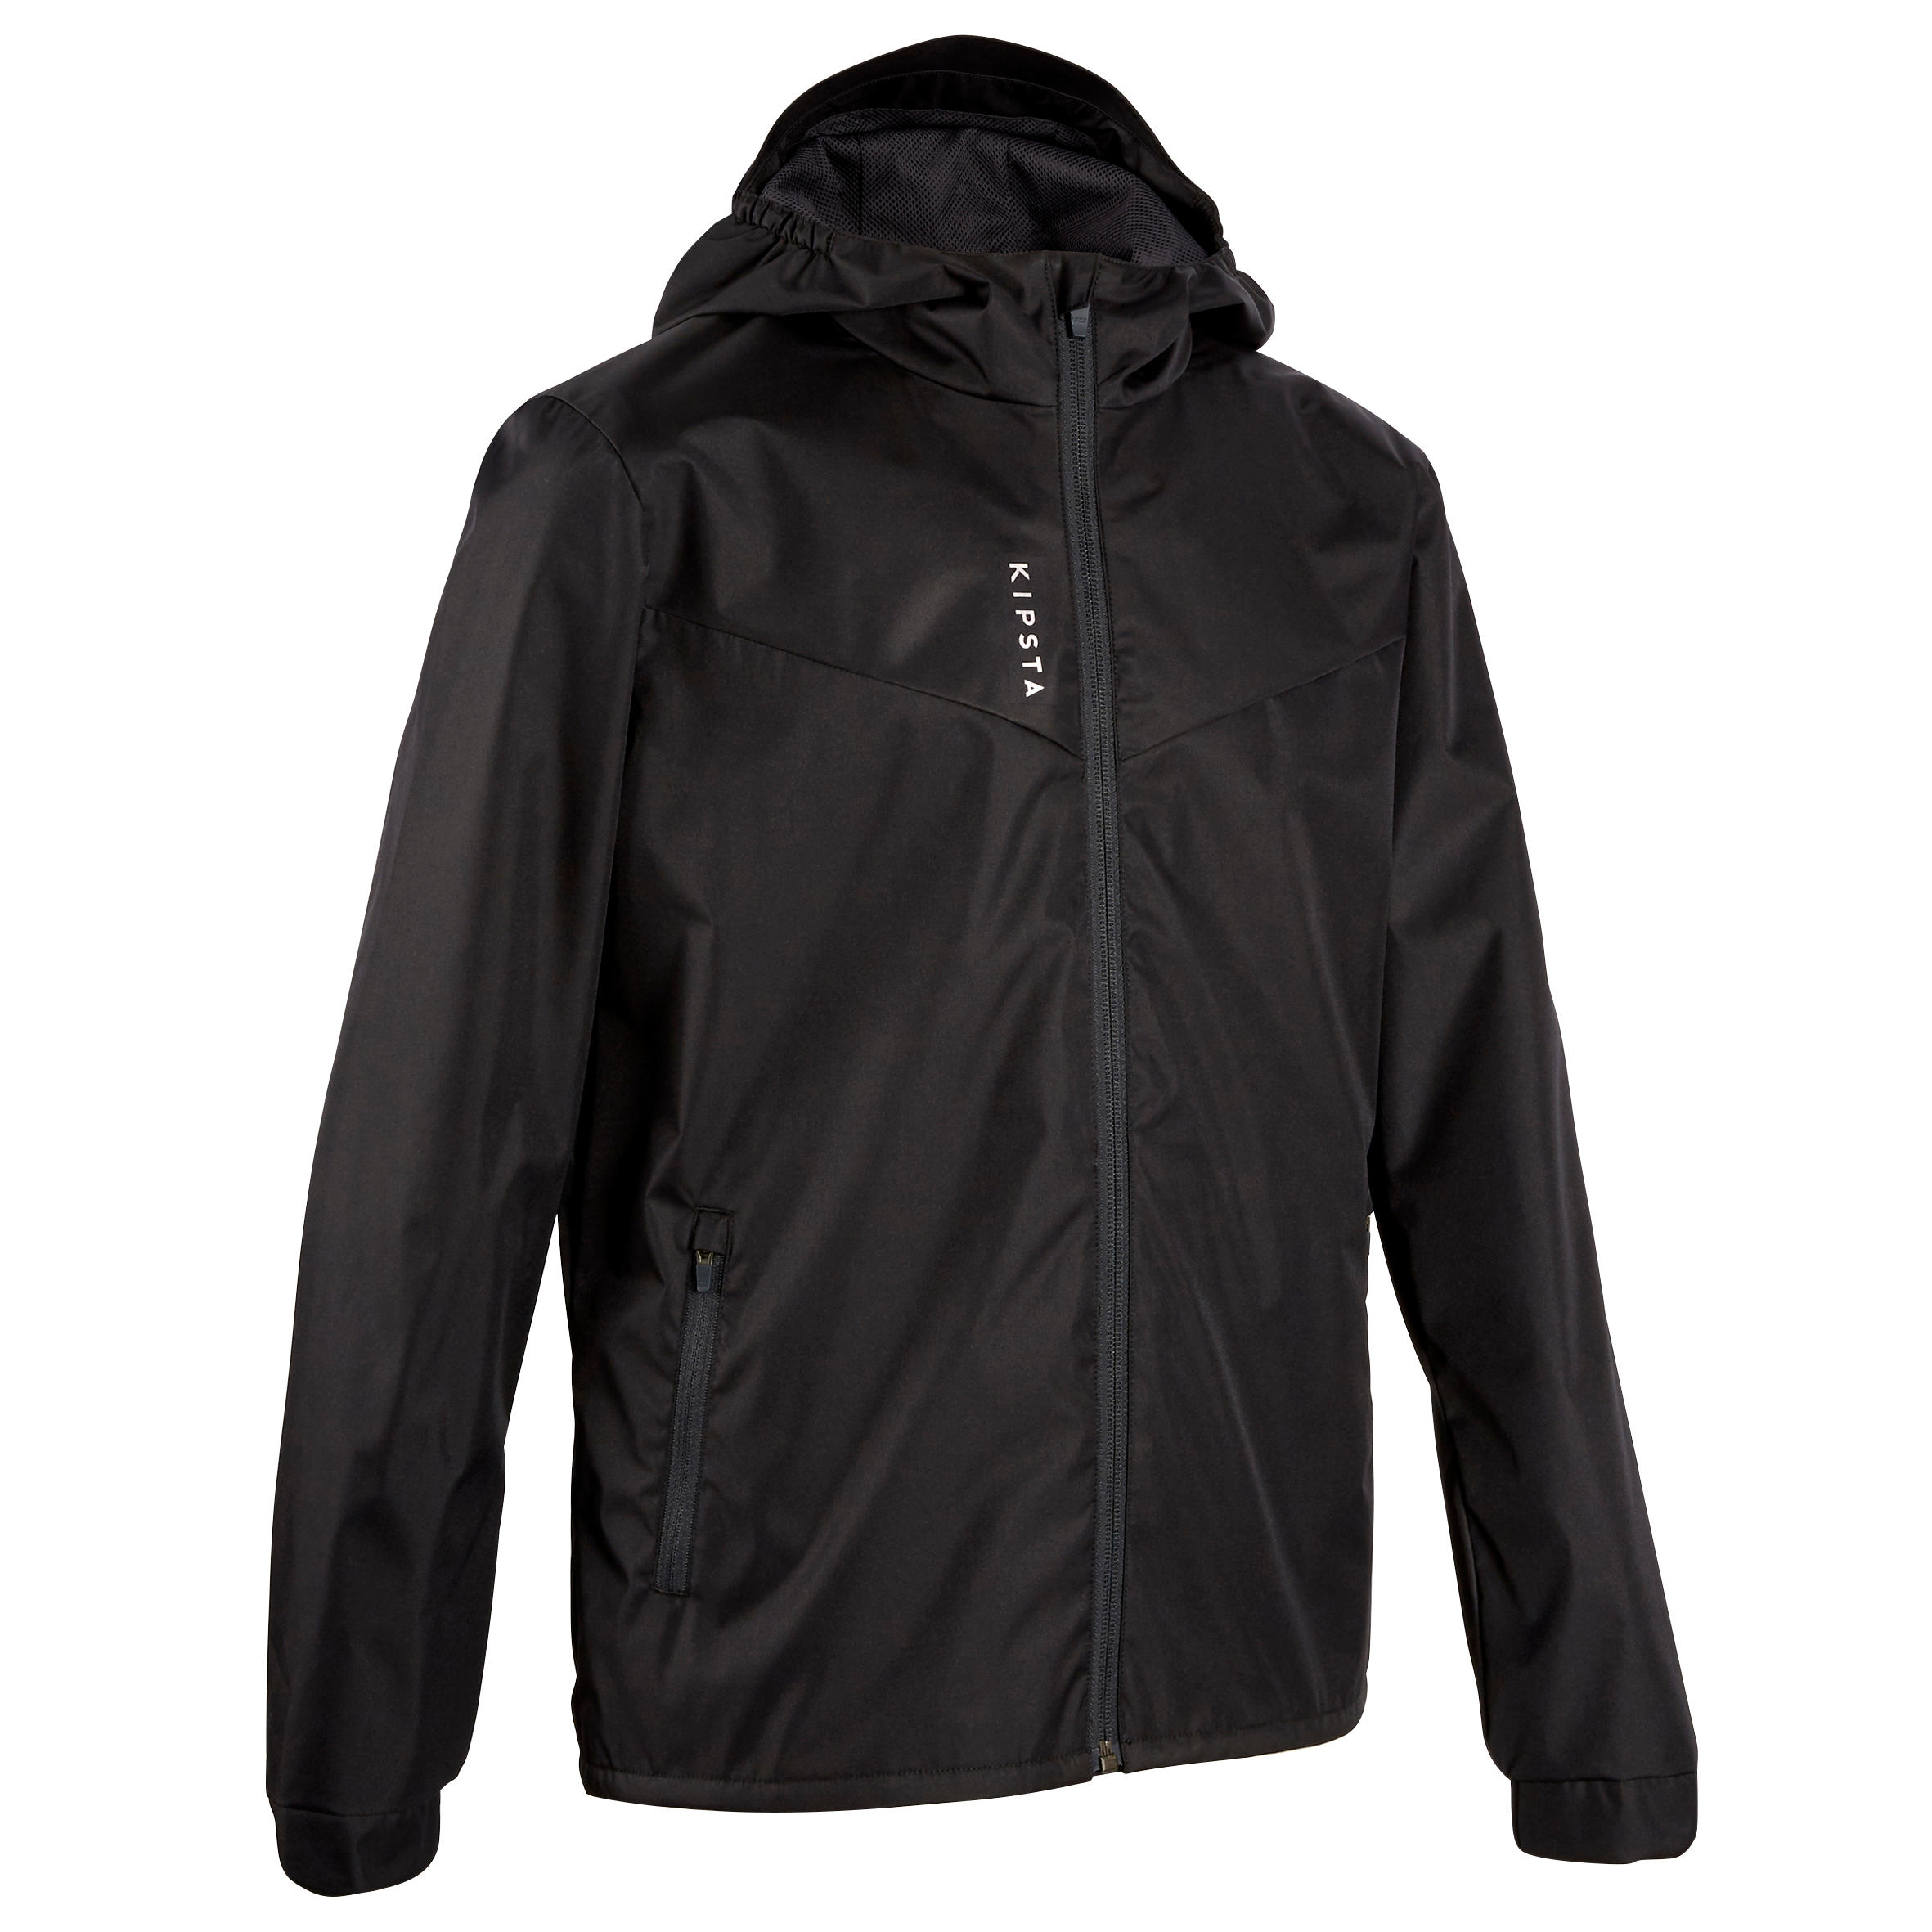 Jachetă Protecție Ploaie T500 la Reducere poza